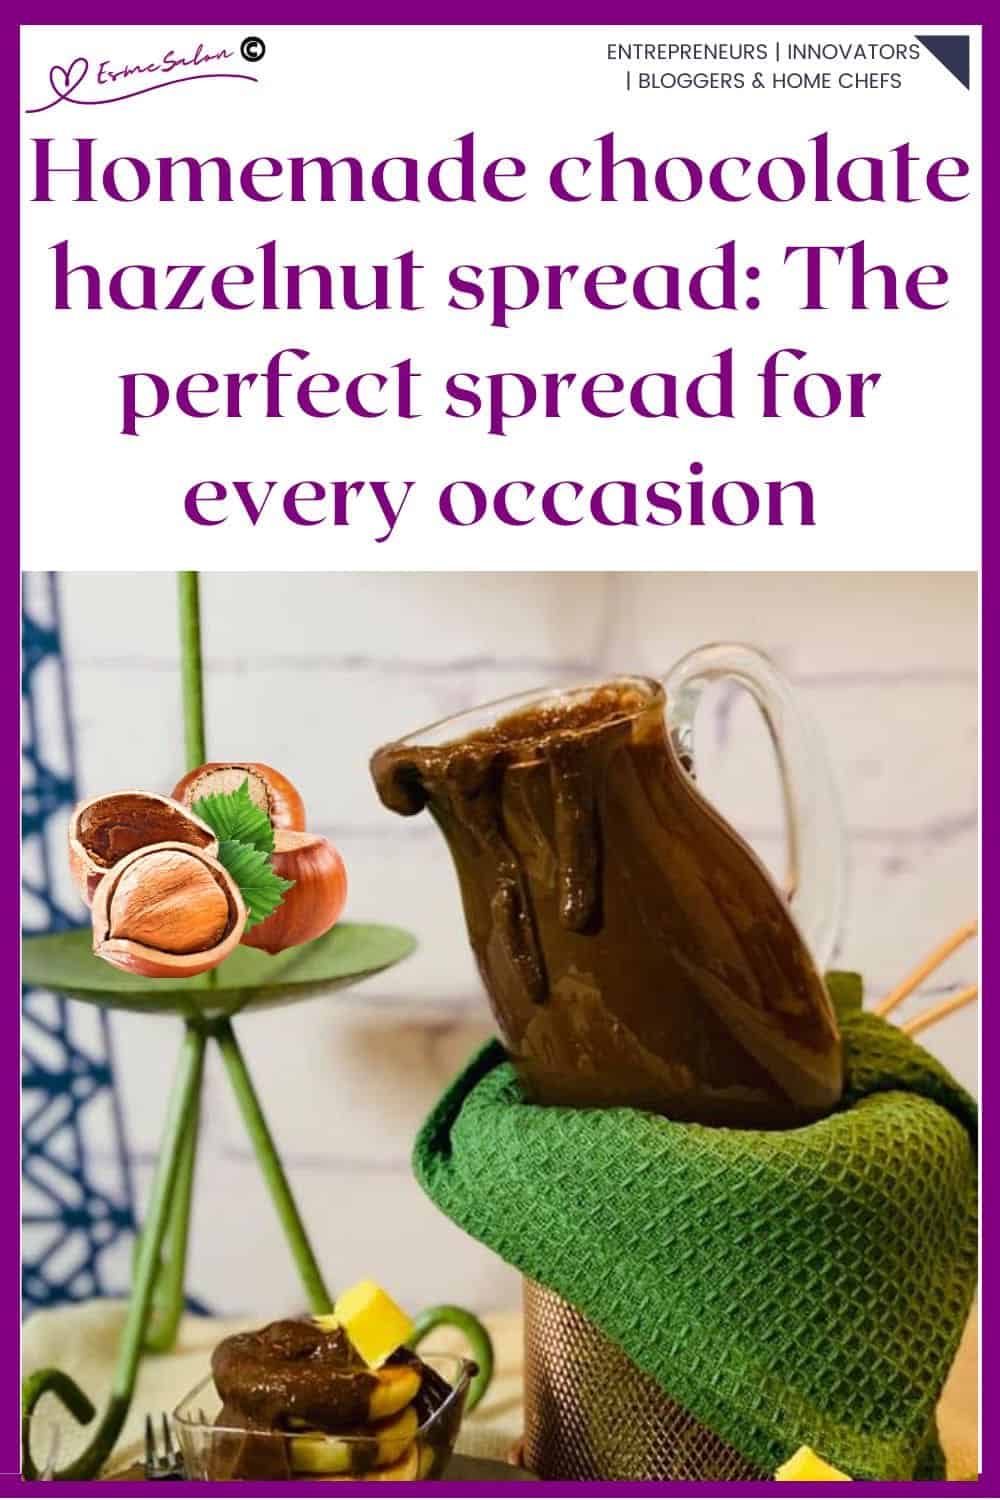 an image of a glass jar with Homemade chocolate hazelnut spread